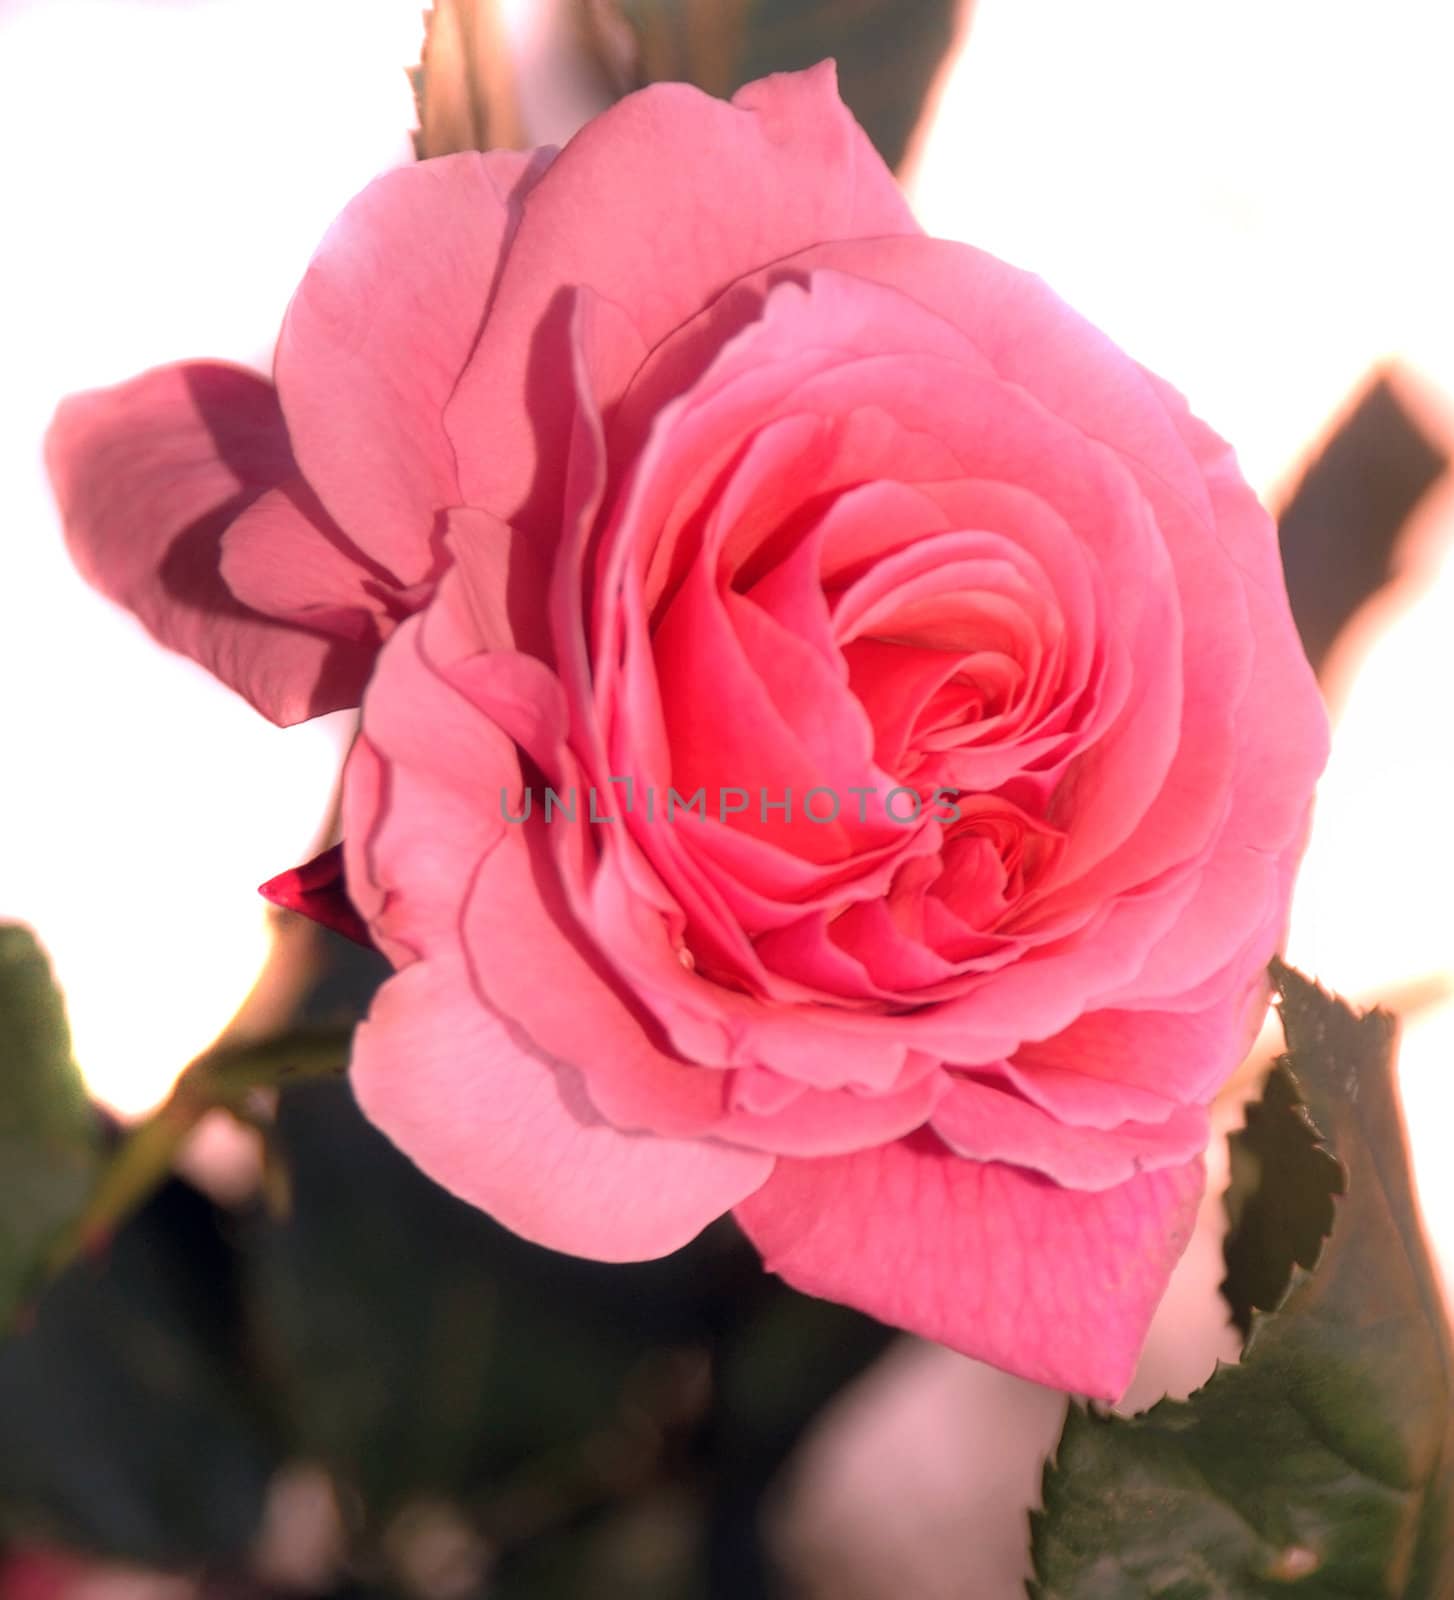 Solitary Rose by pazham